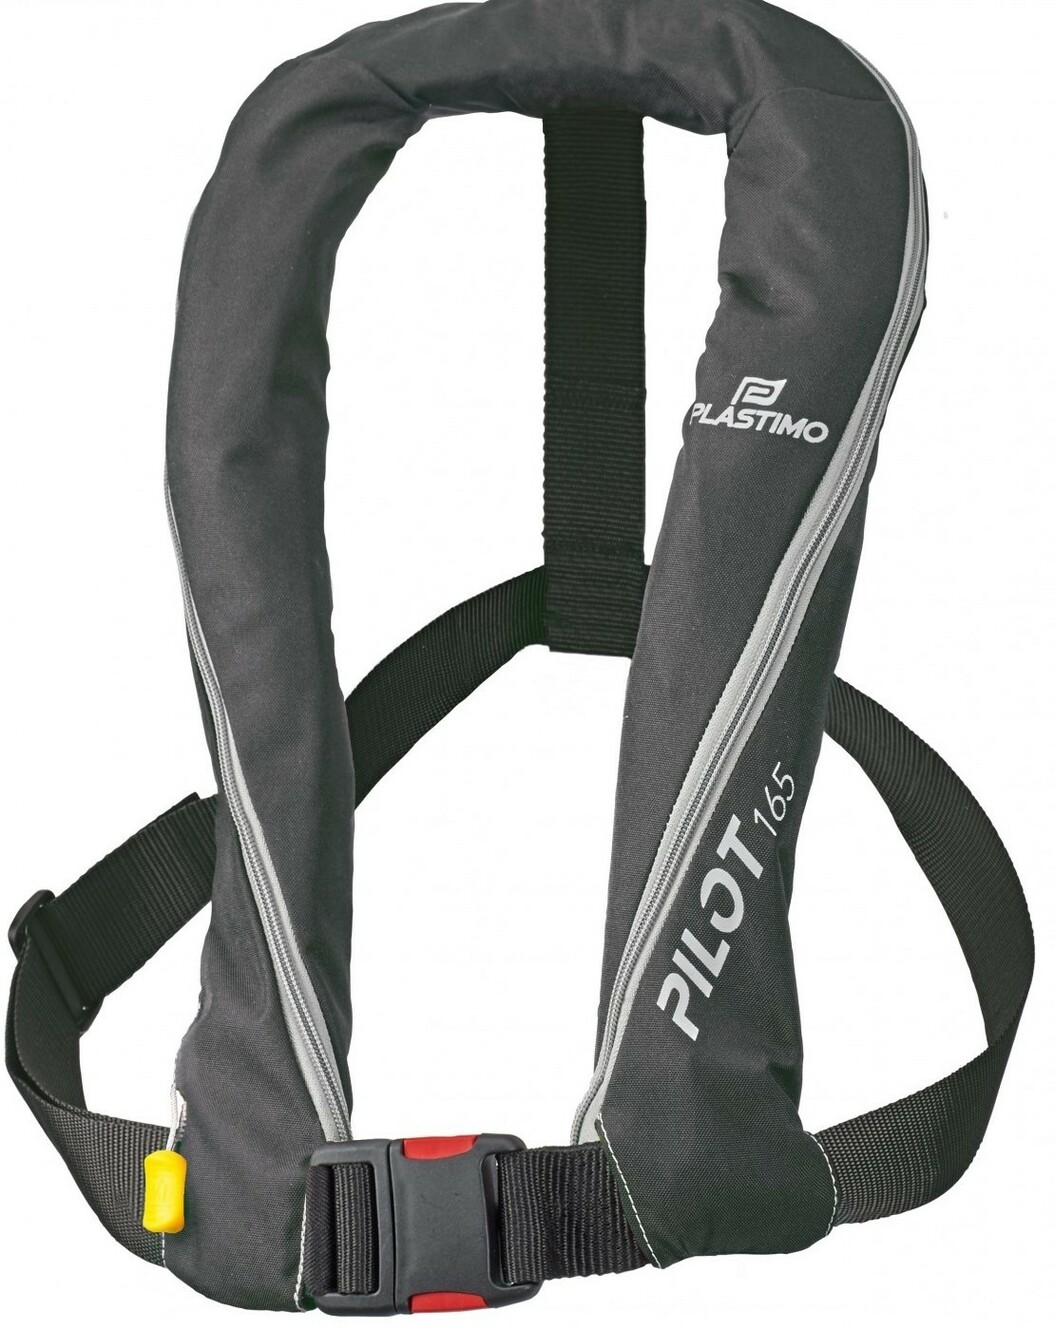 Lifejacket Pilot 165 Manual Black Zip Harness Rated Buoyancy 150 N Actual Buoyancy 165 N